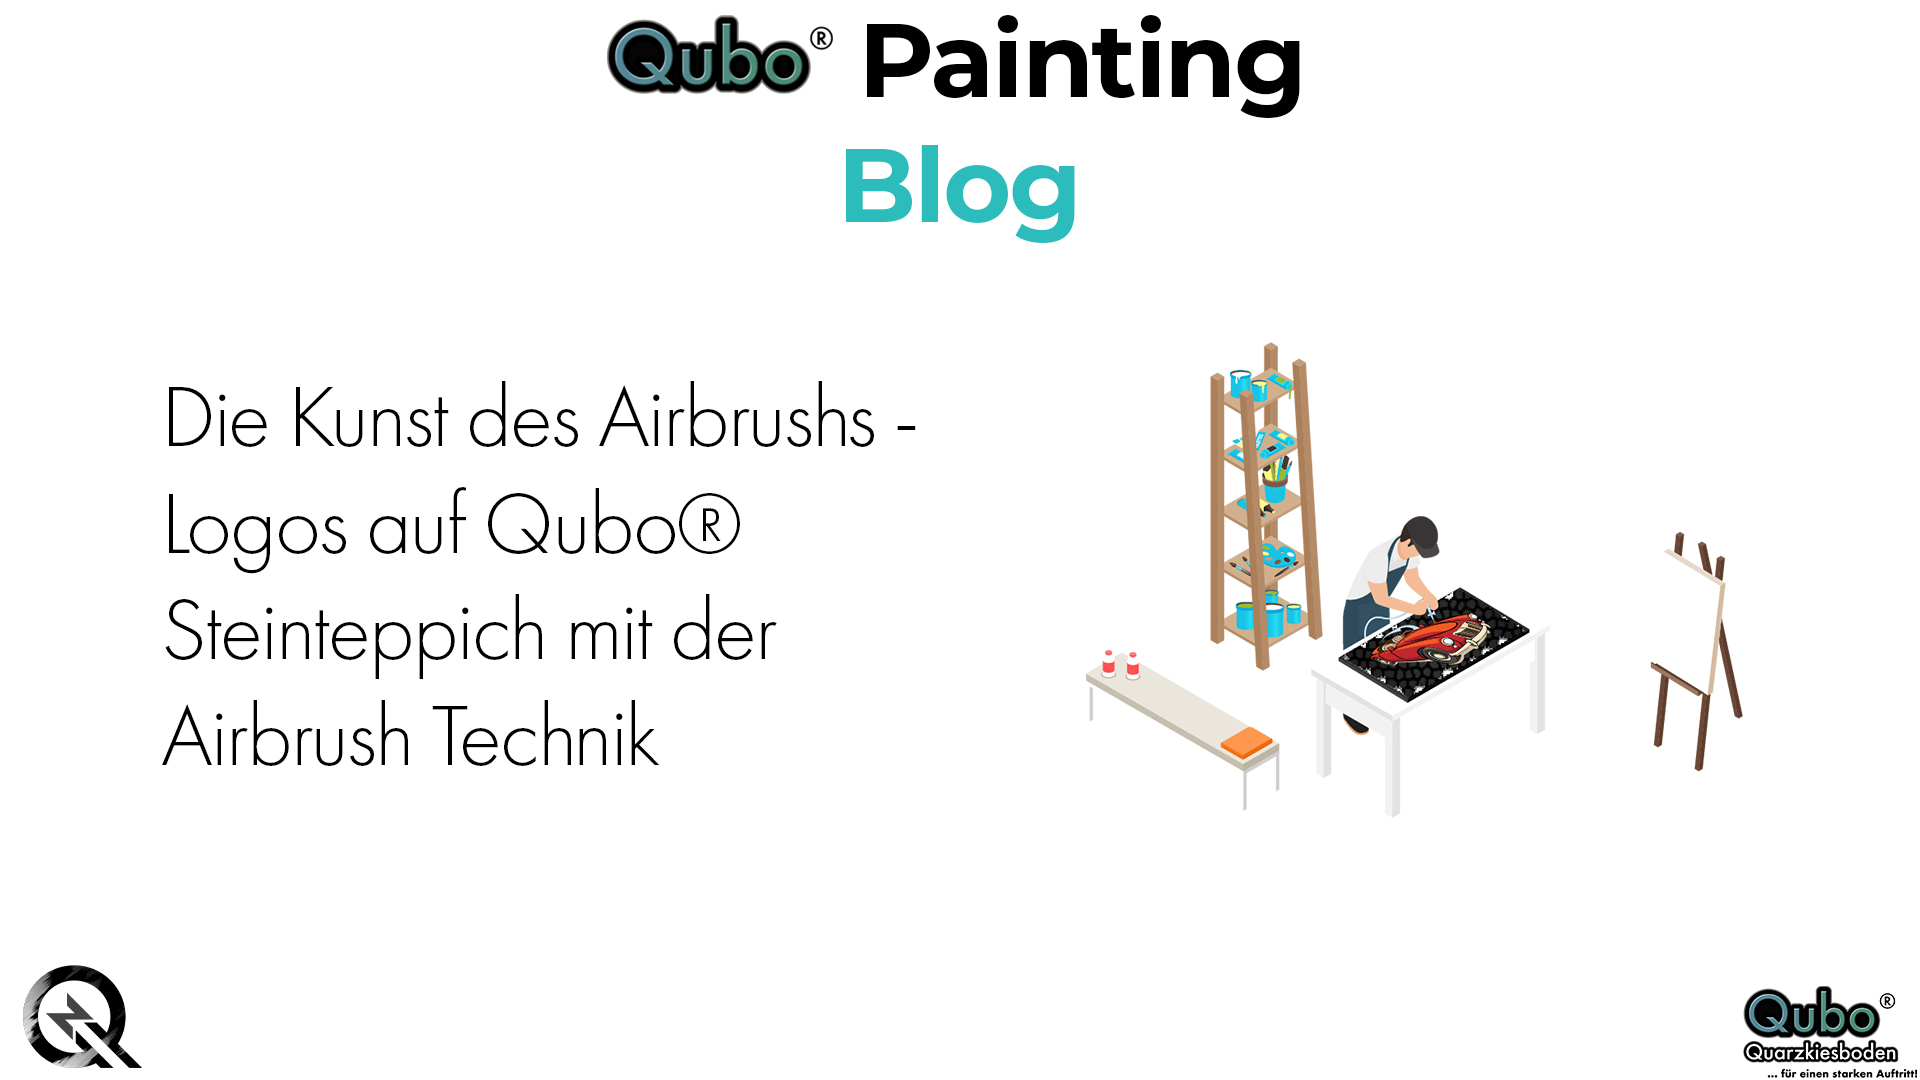 Qubo Painting Blog